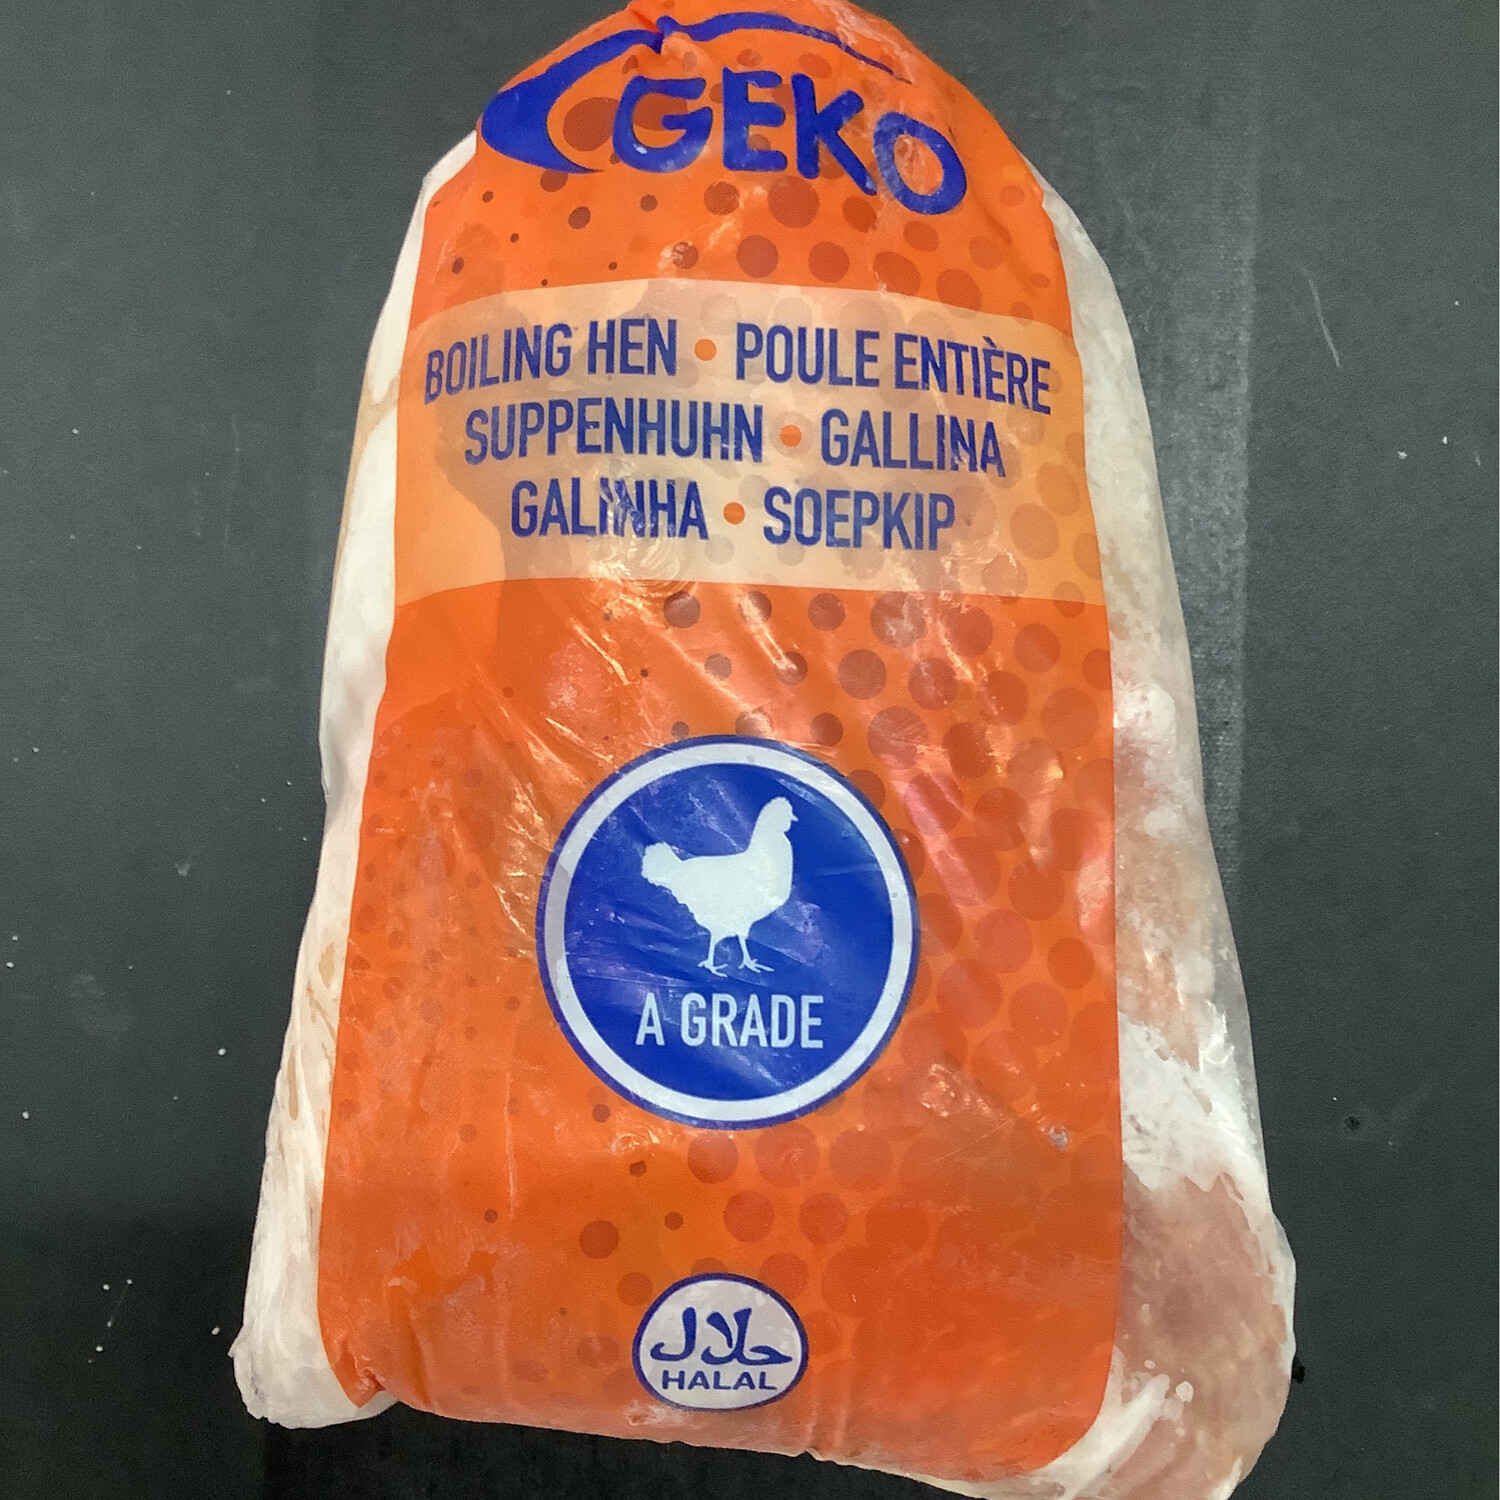 Geko Frozen Whole Hens 1400g (Halal)